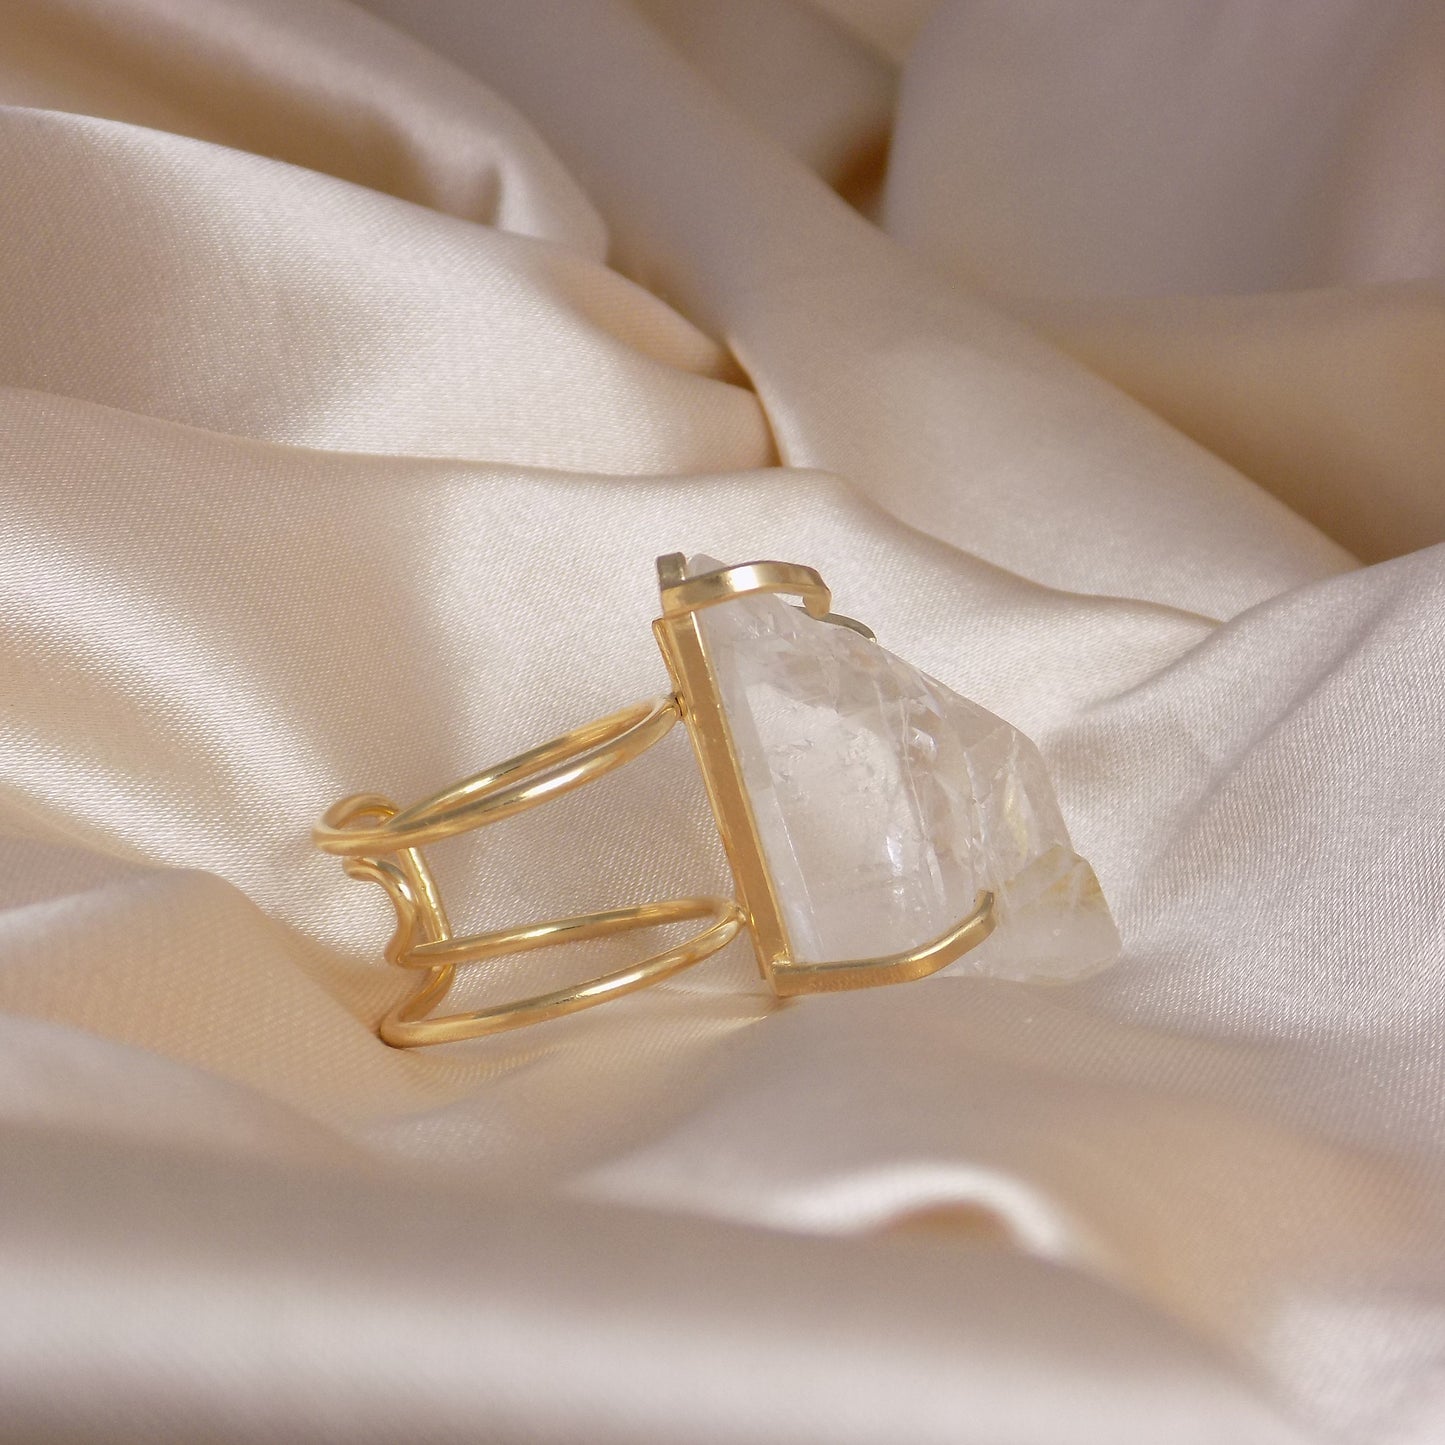 Boho Clear Crystal Quartz Ring Gold Adjustable - Large Raw Gemstone